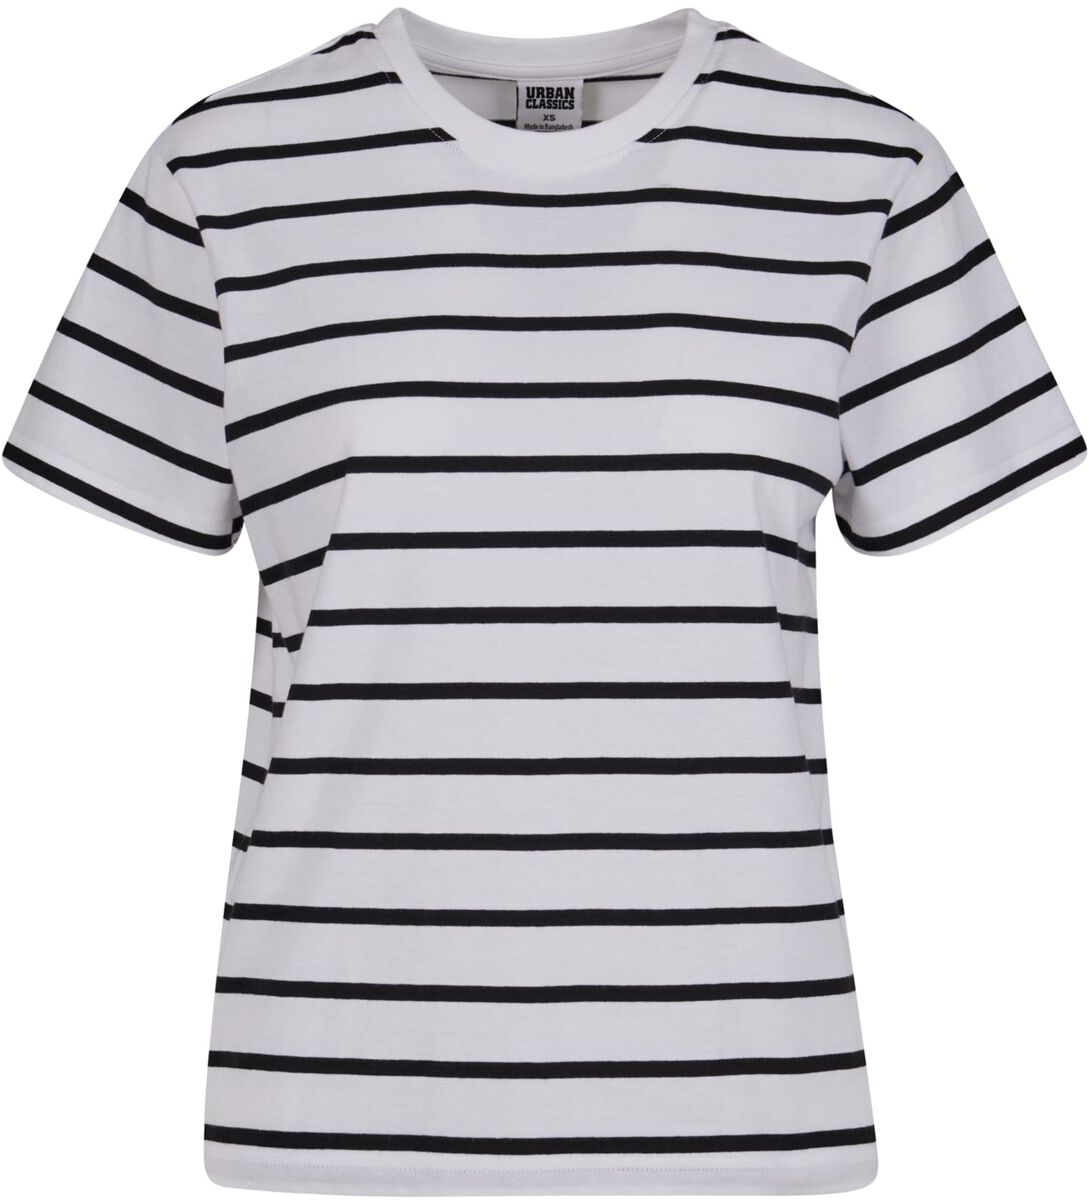 Urban Classics Ladies Striped Boxy Tee T-Shirt schwarz weiß in XXL